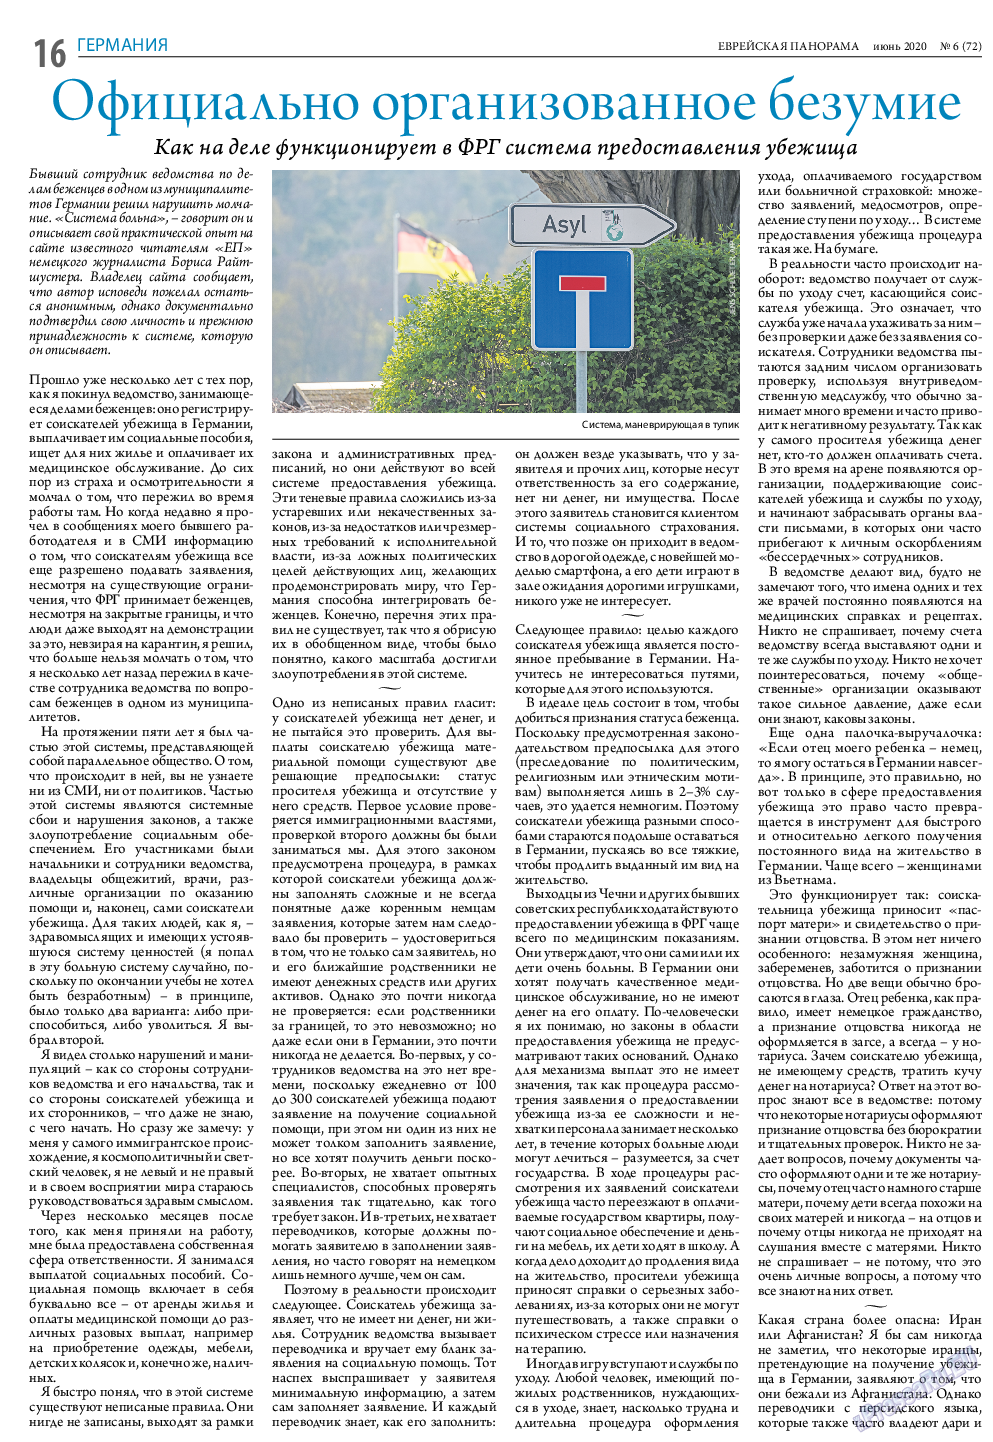 Еврейская панорама, газета. 2020 №6 стр.16